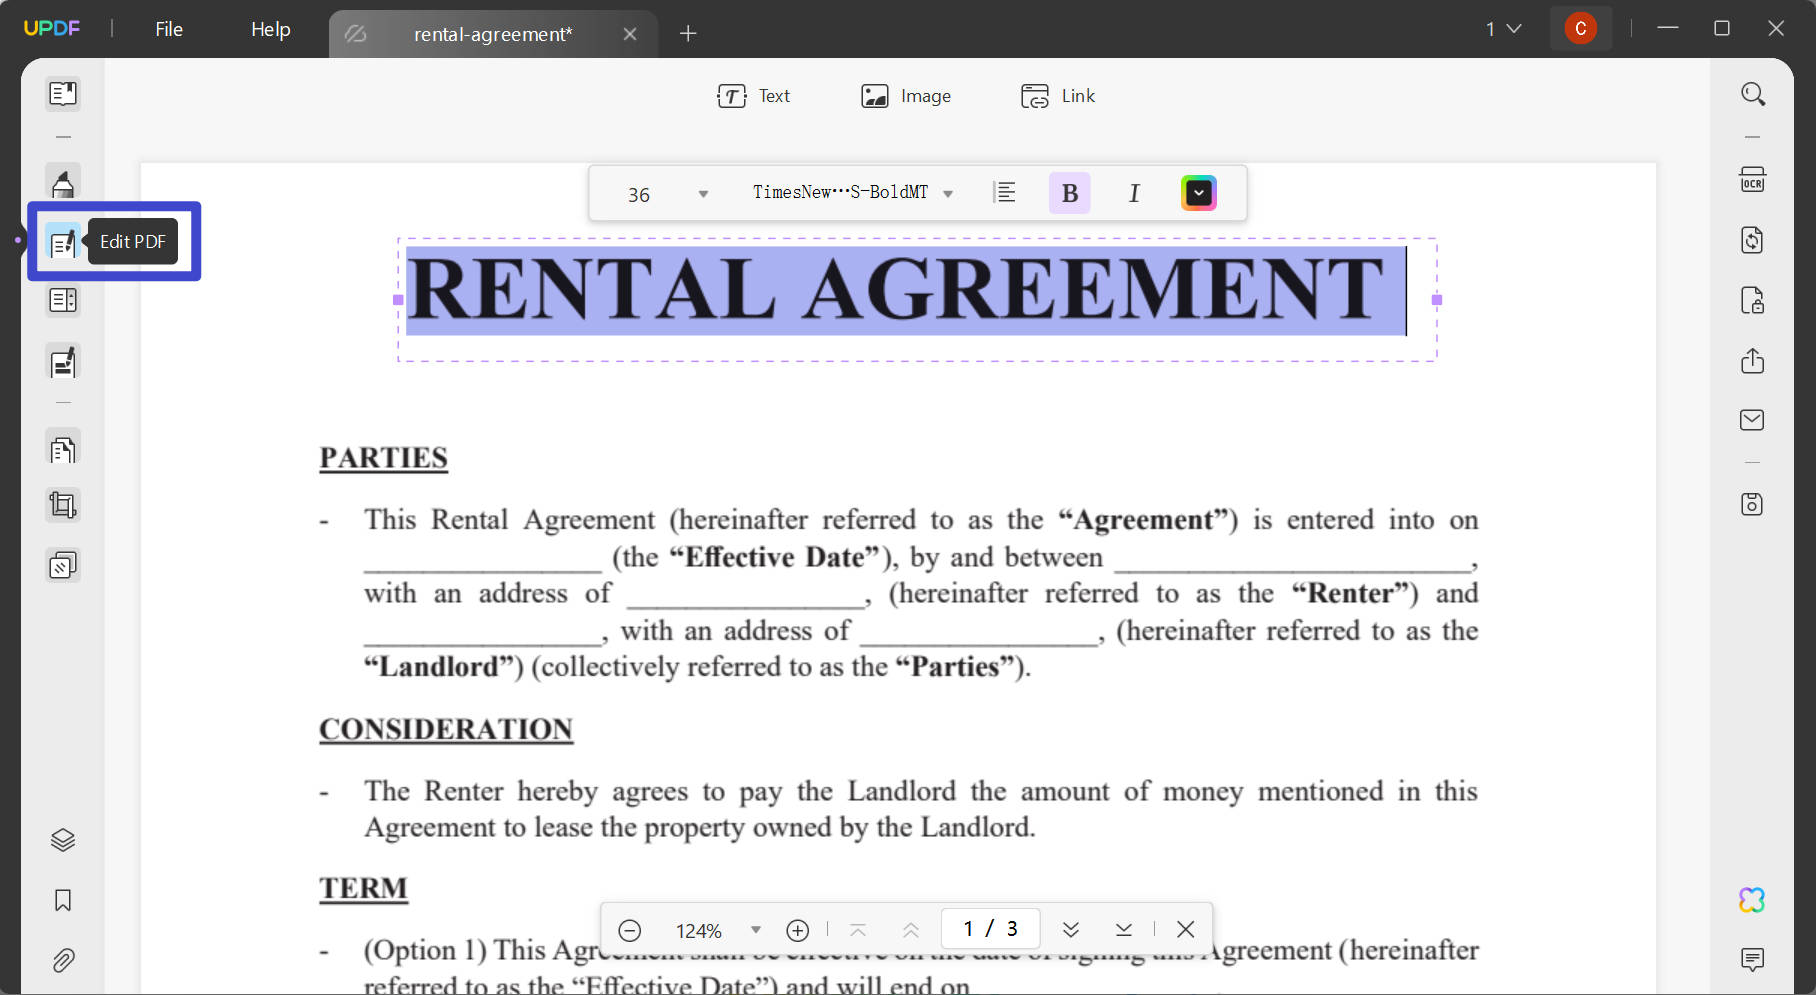 contract pdf download edit form updf